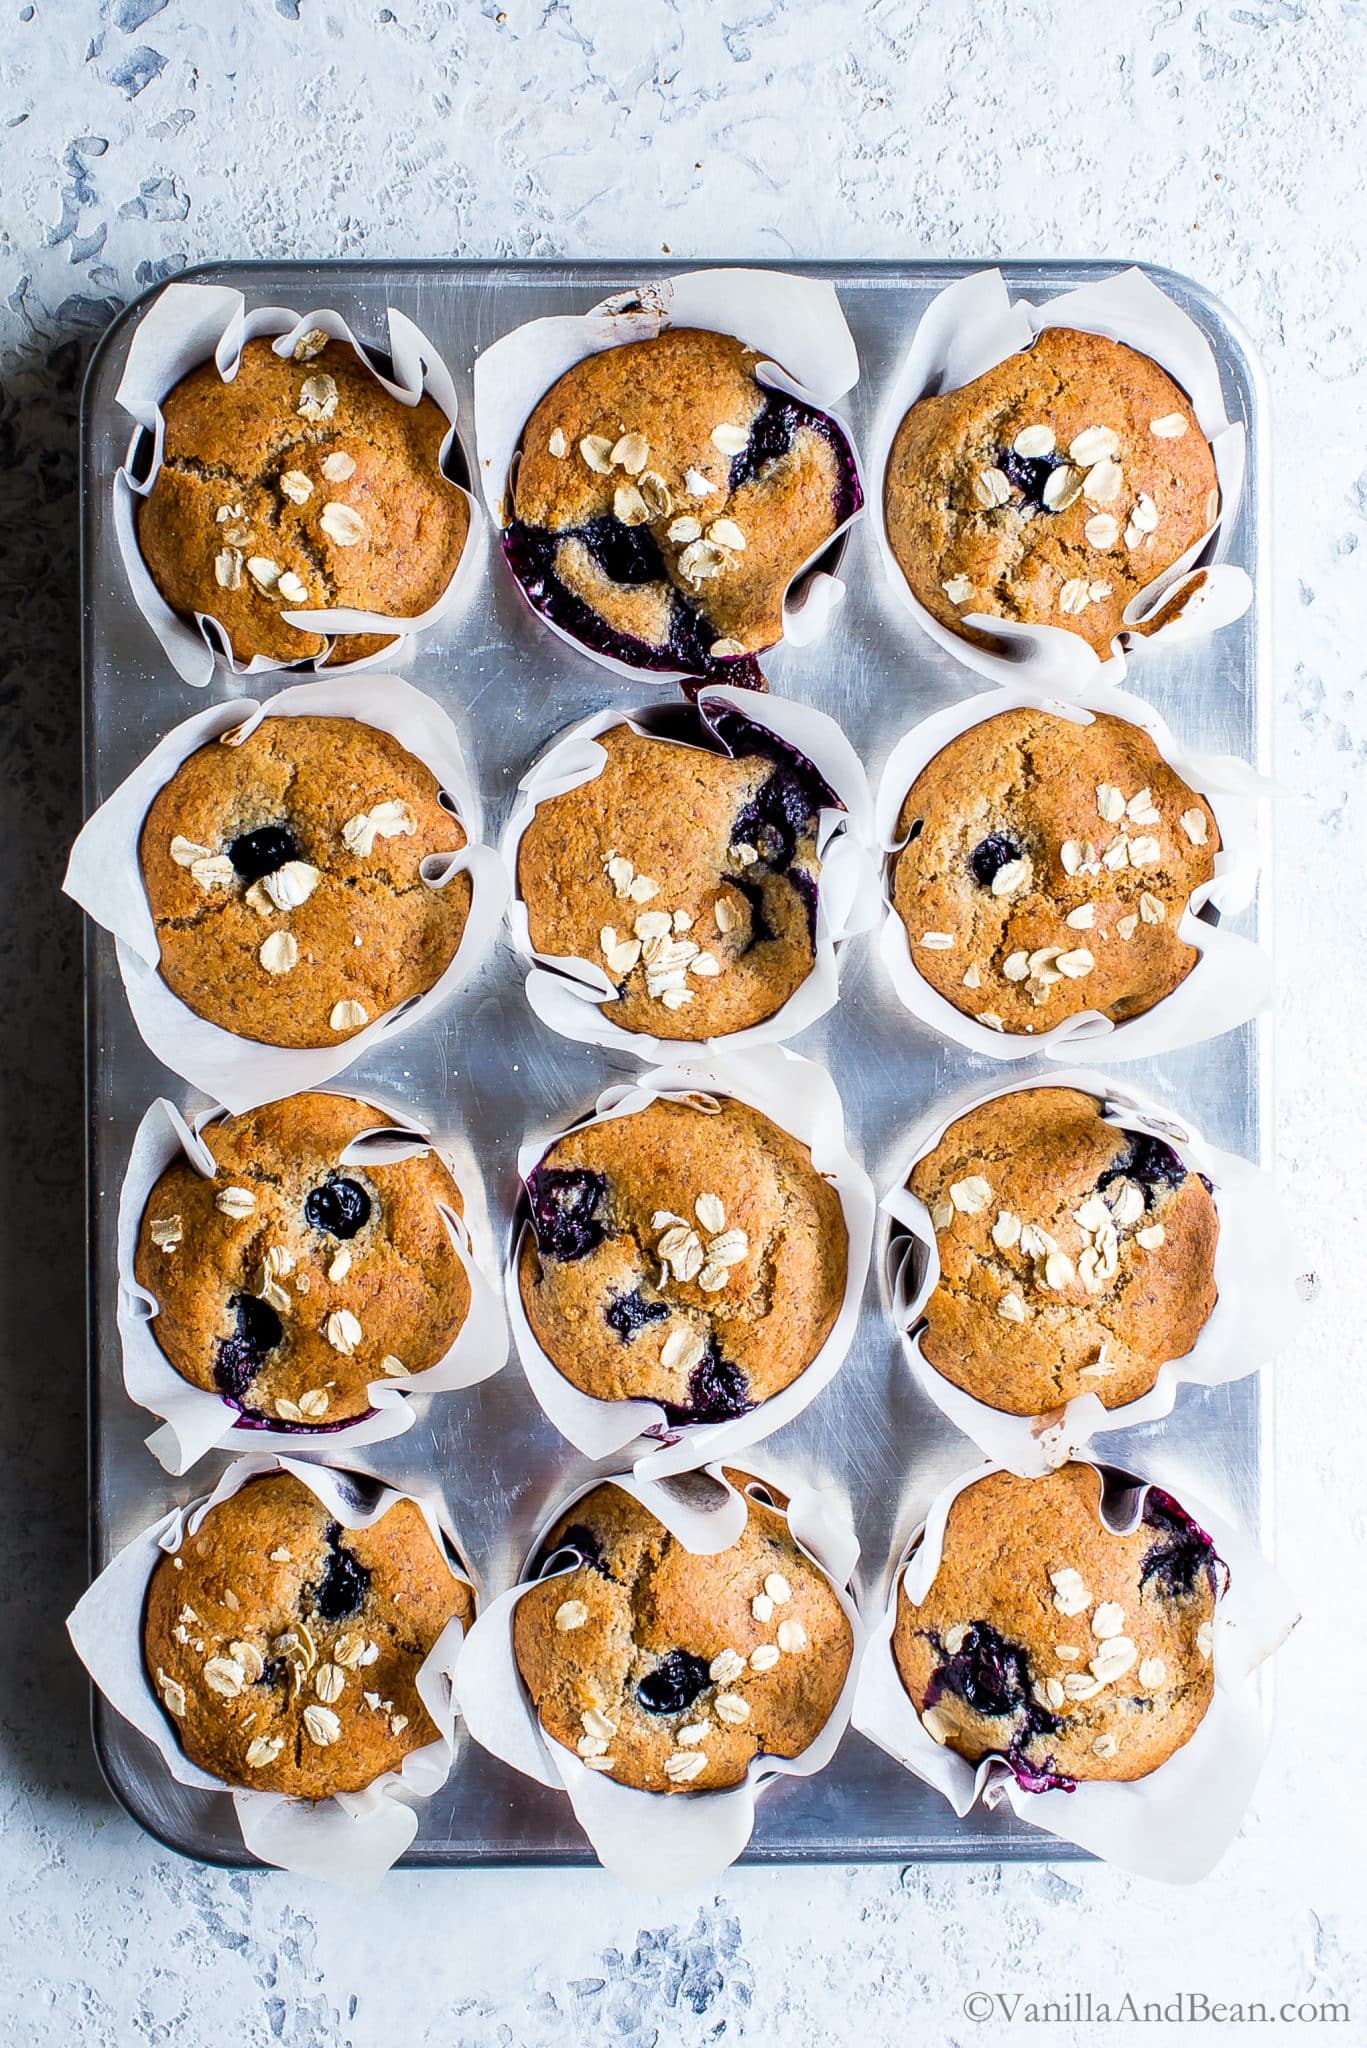 Overhead shot of baked gluten free vegan blueberry muffins. 